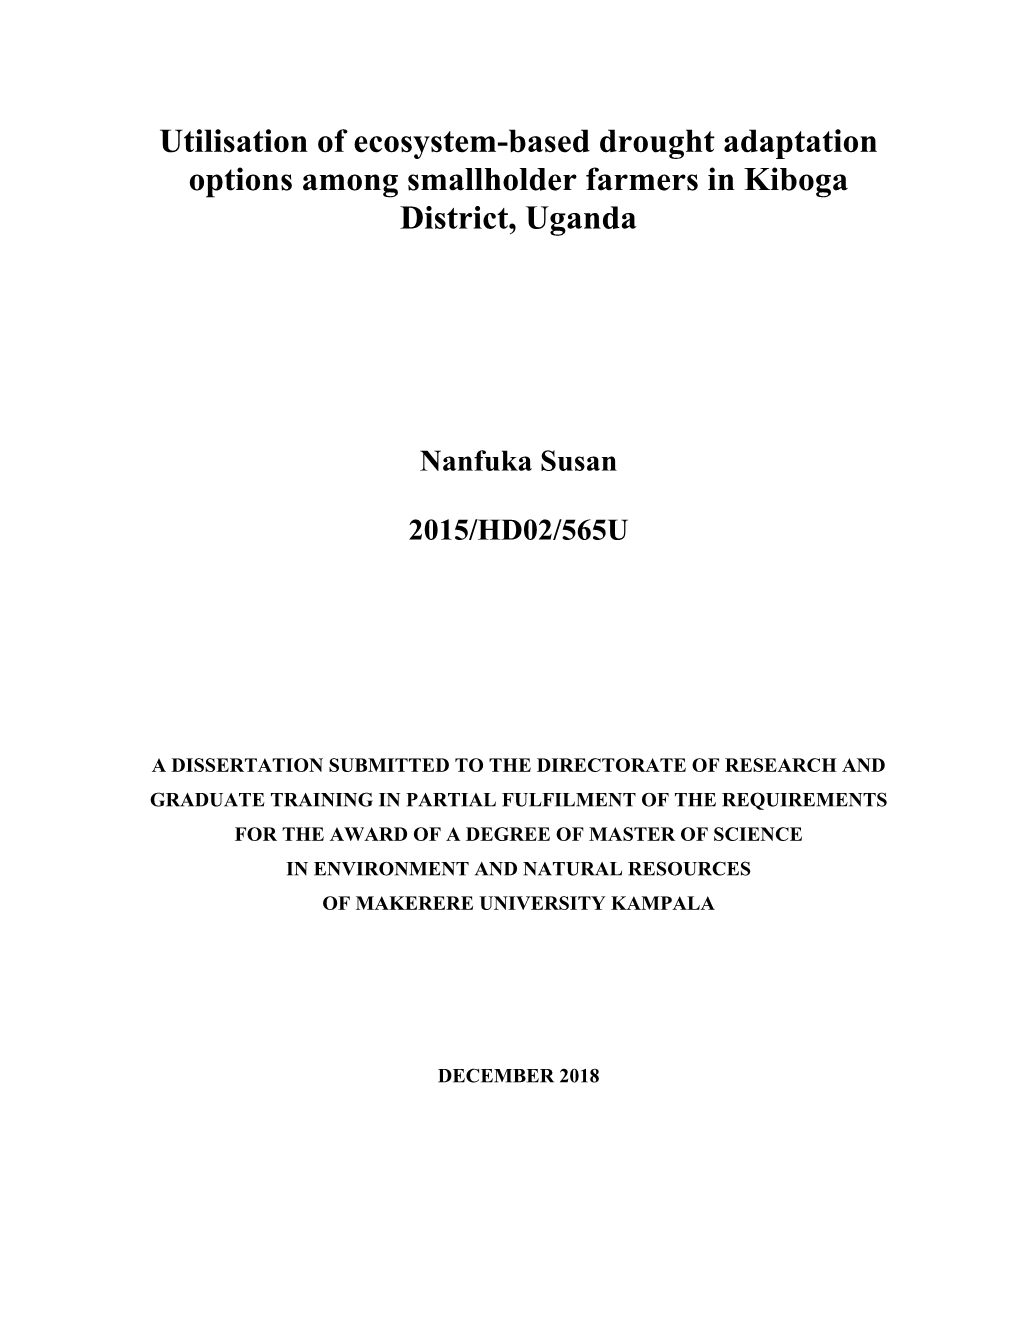 Utilisation of Ecosystem-Based Drought Adaptation Options Among Smallholder Farmers in Kiboga District, Uganda